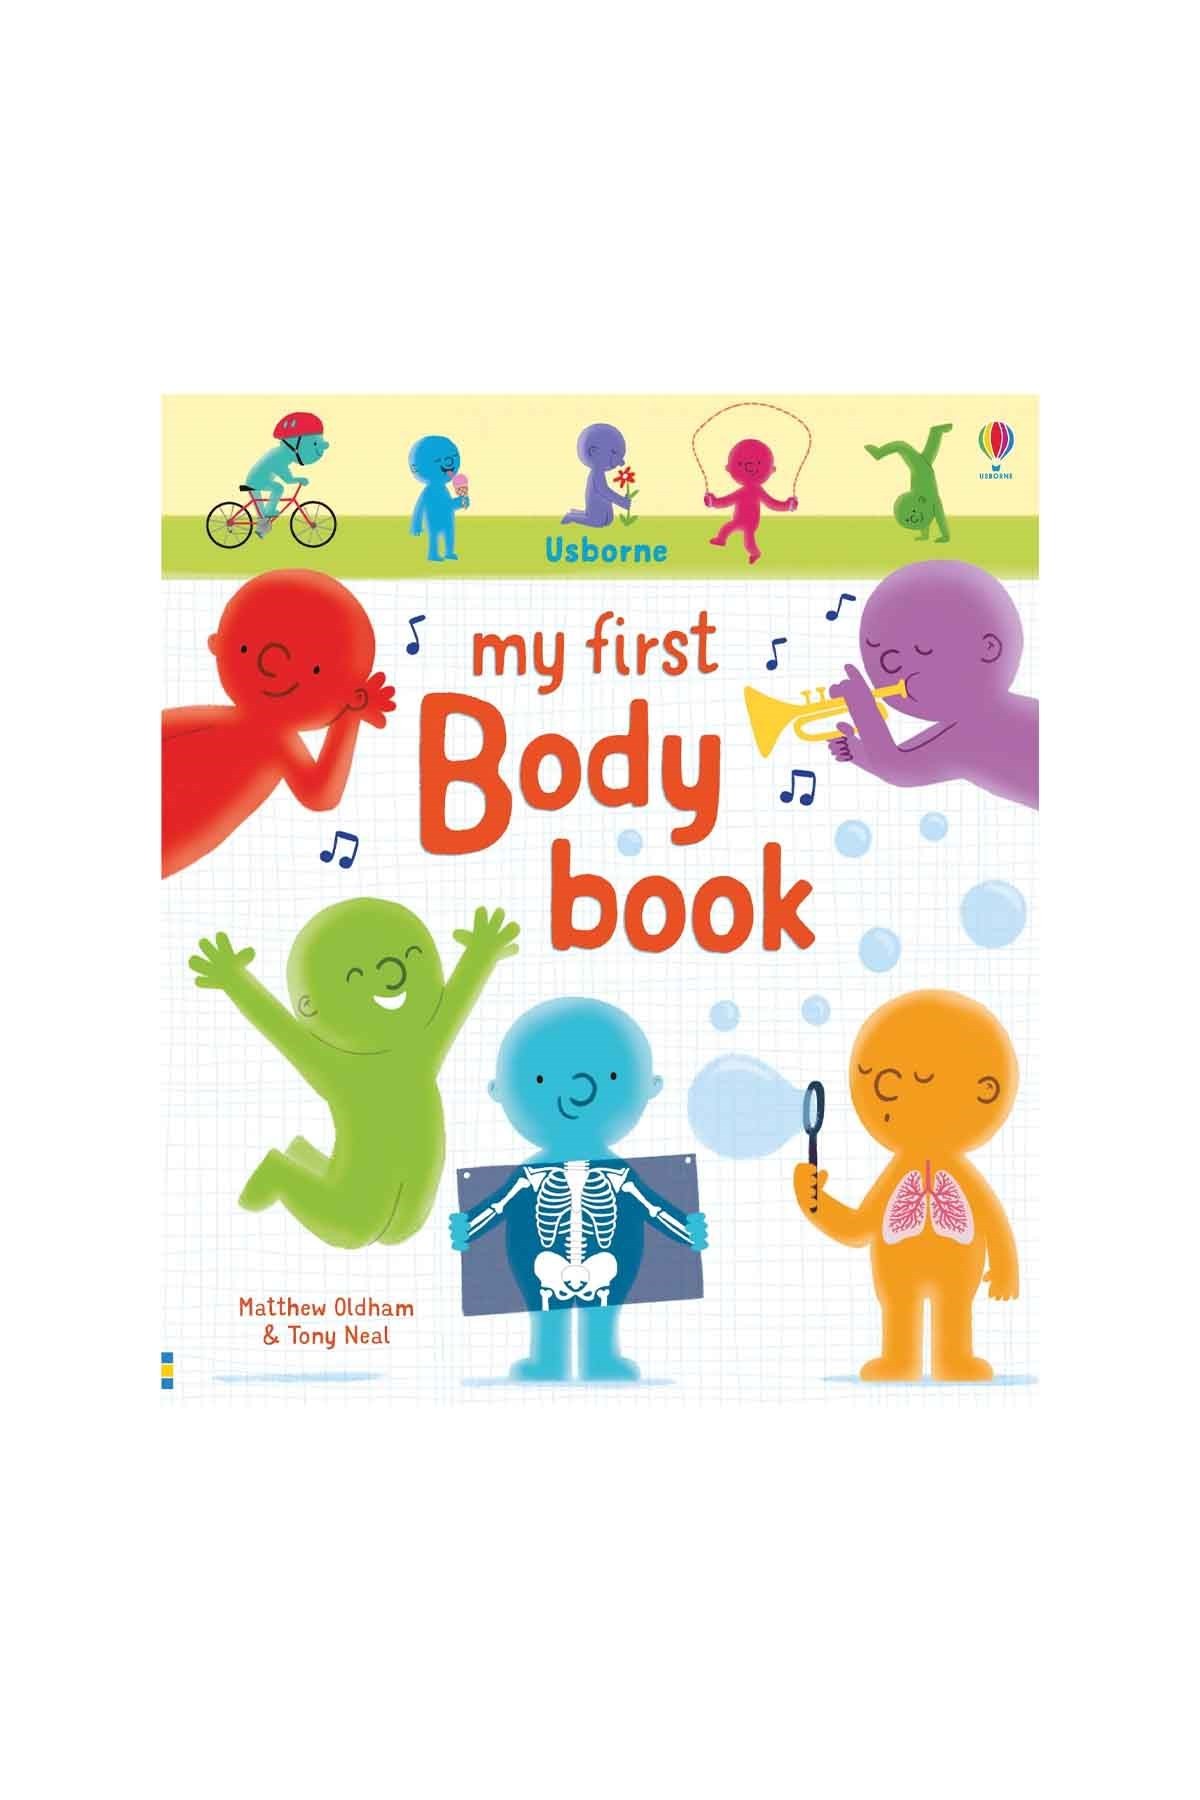 The Usborne My First Body Book